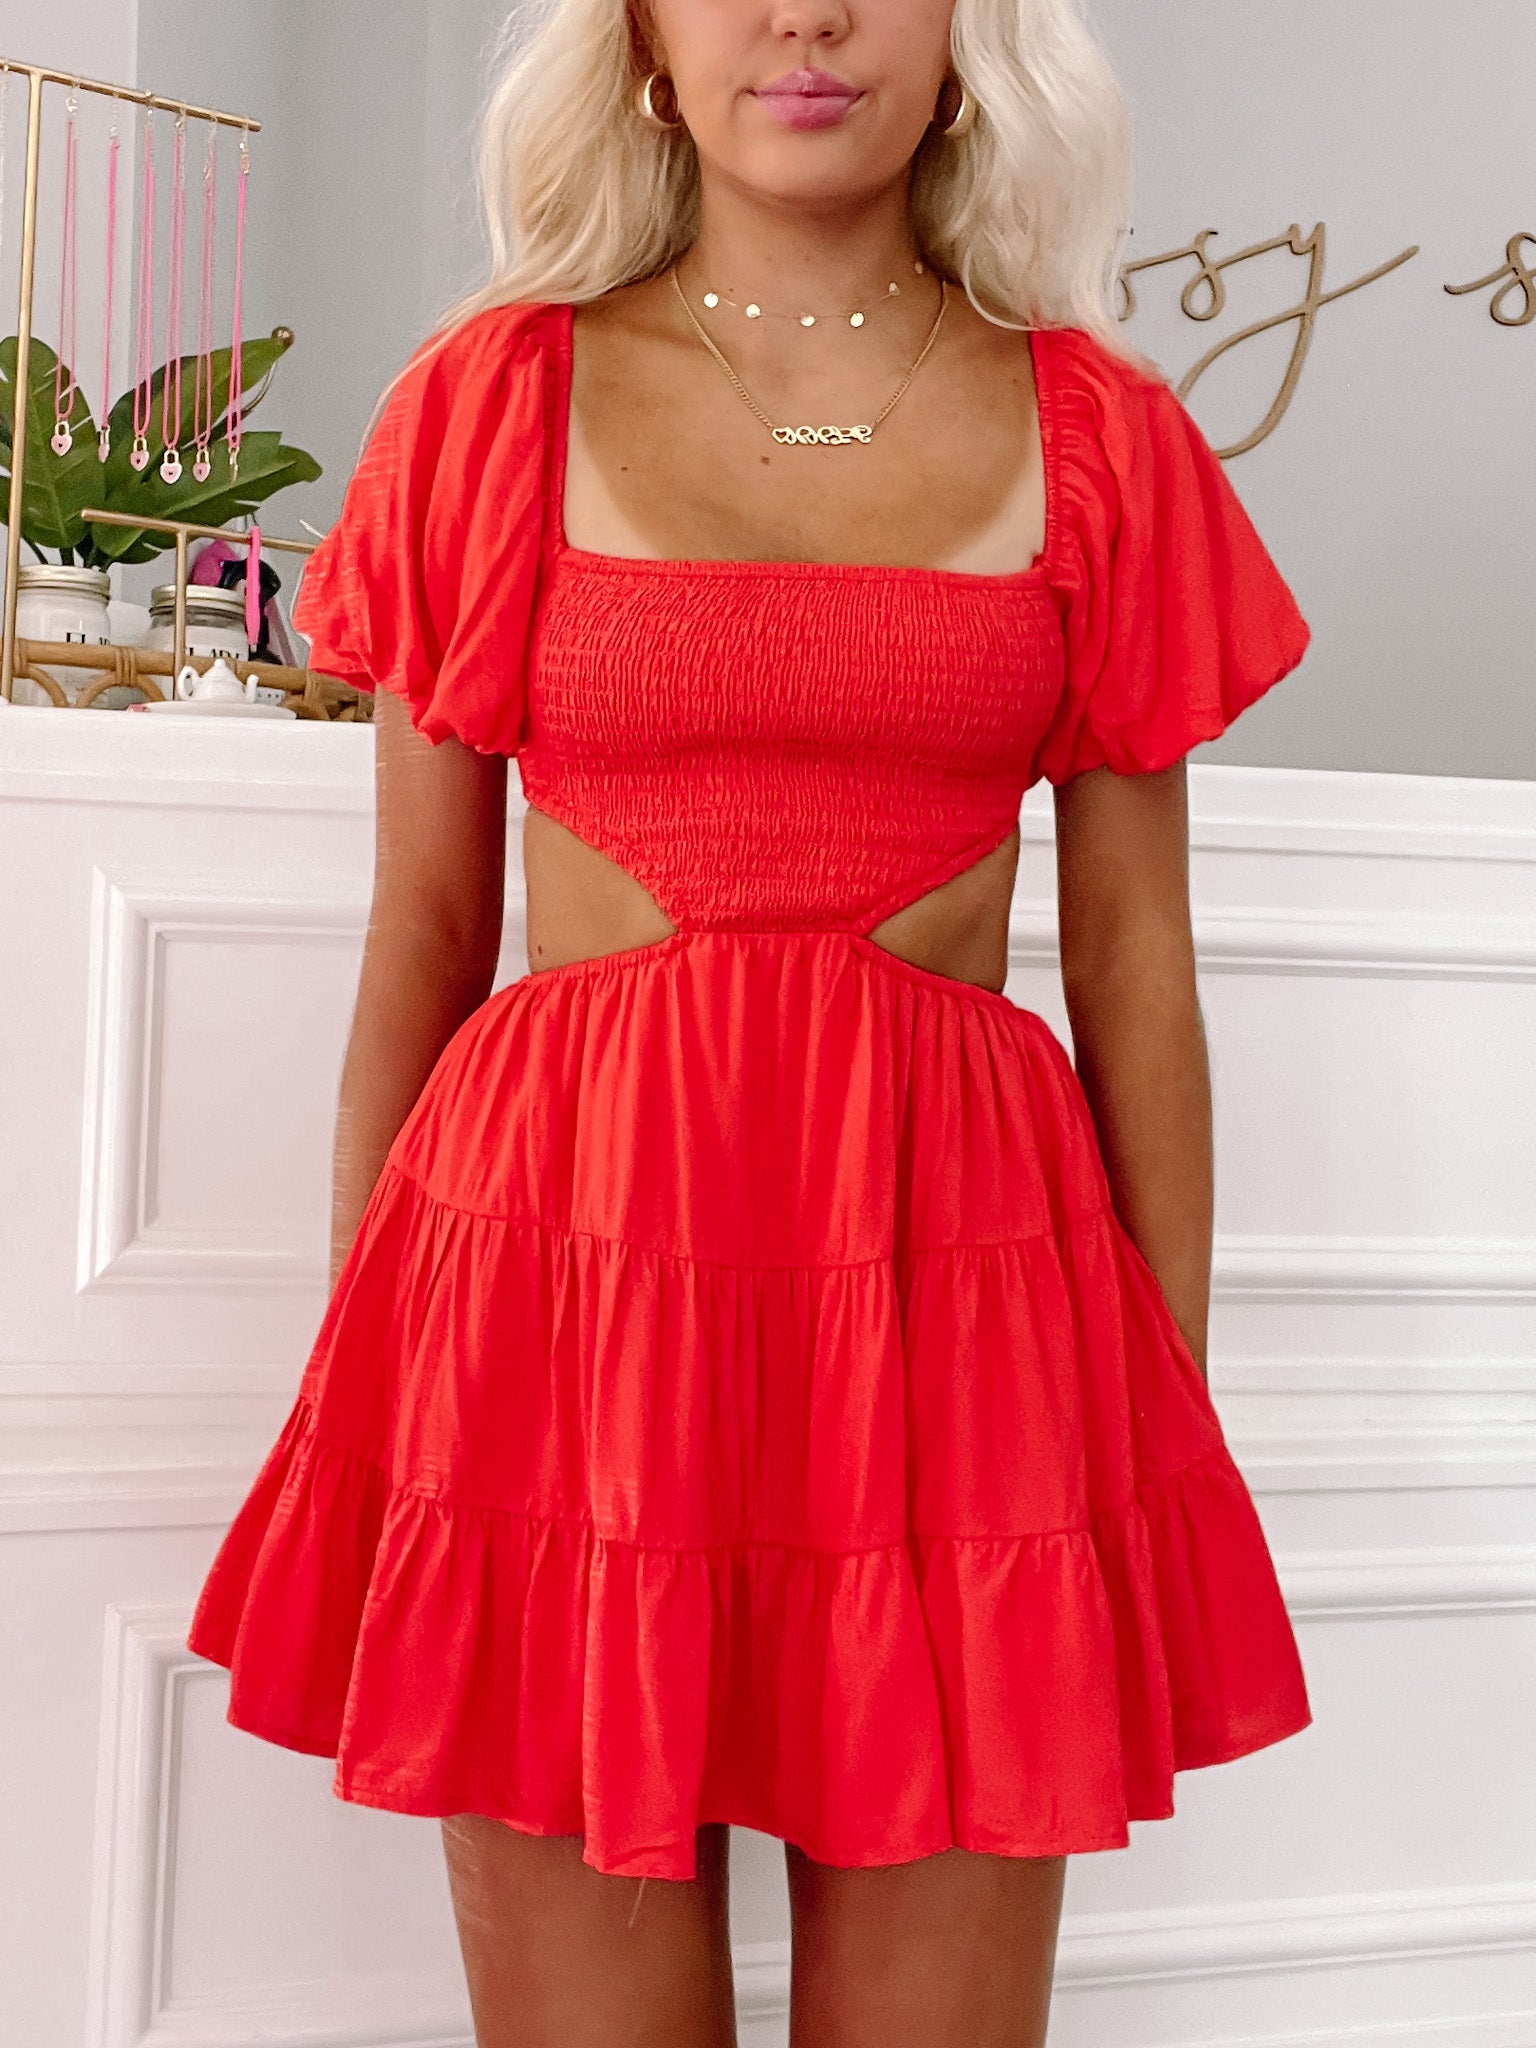 Clementine Cutie Red Dress | sassyshortcake.com | Sassy Shortcake